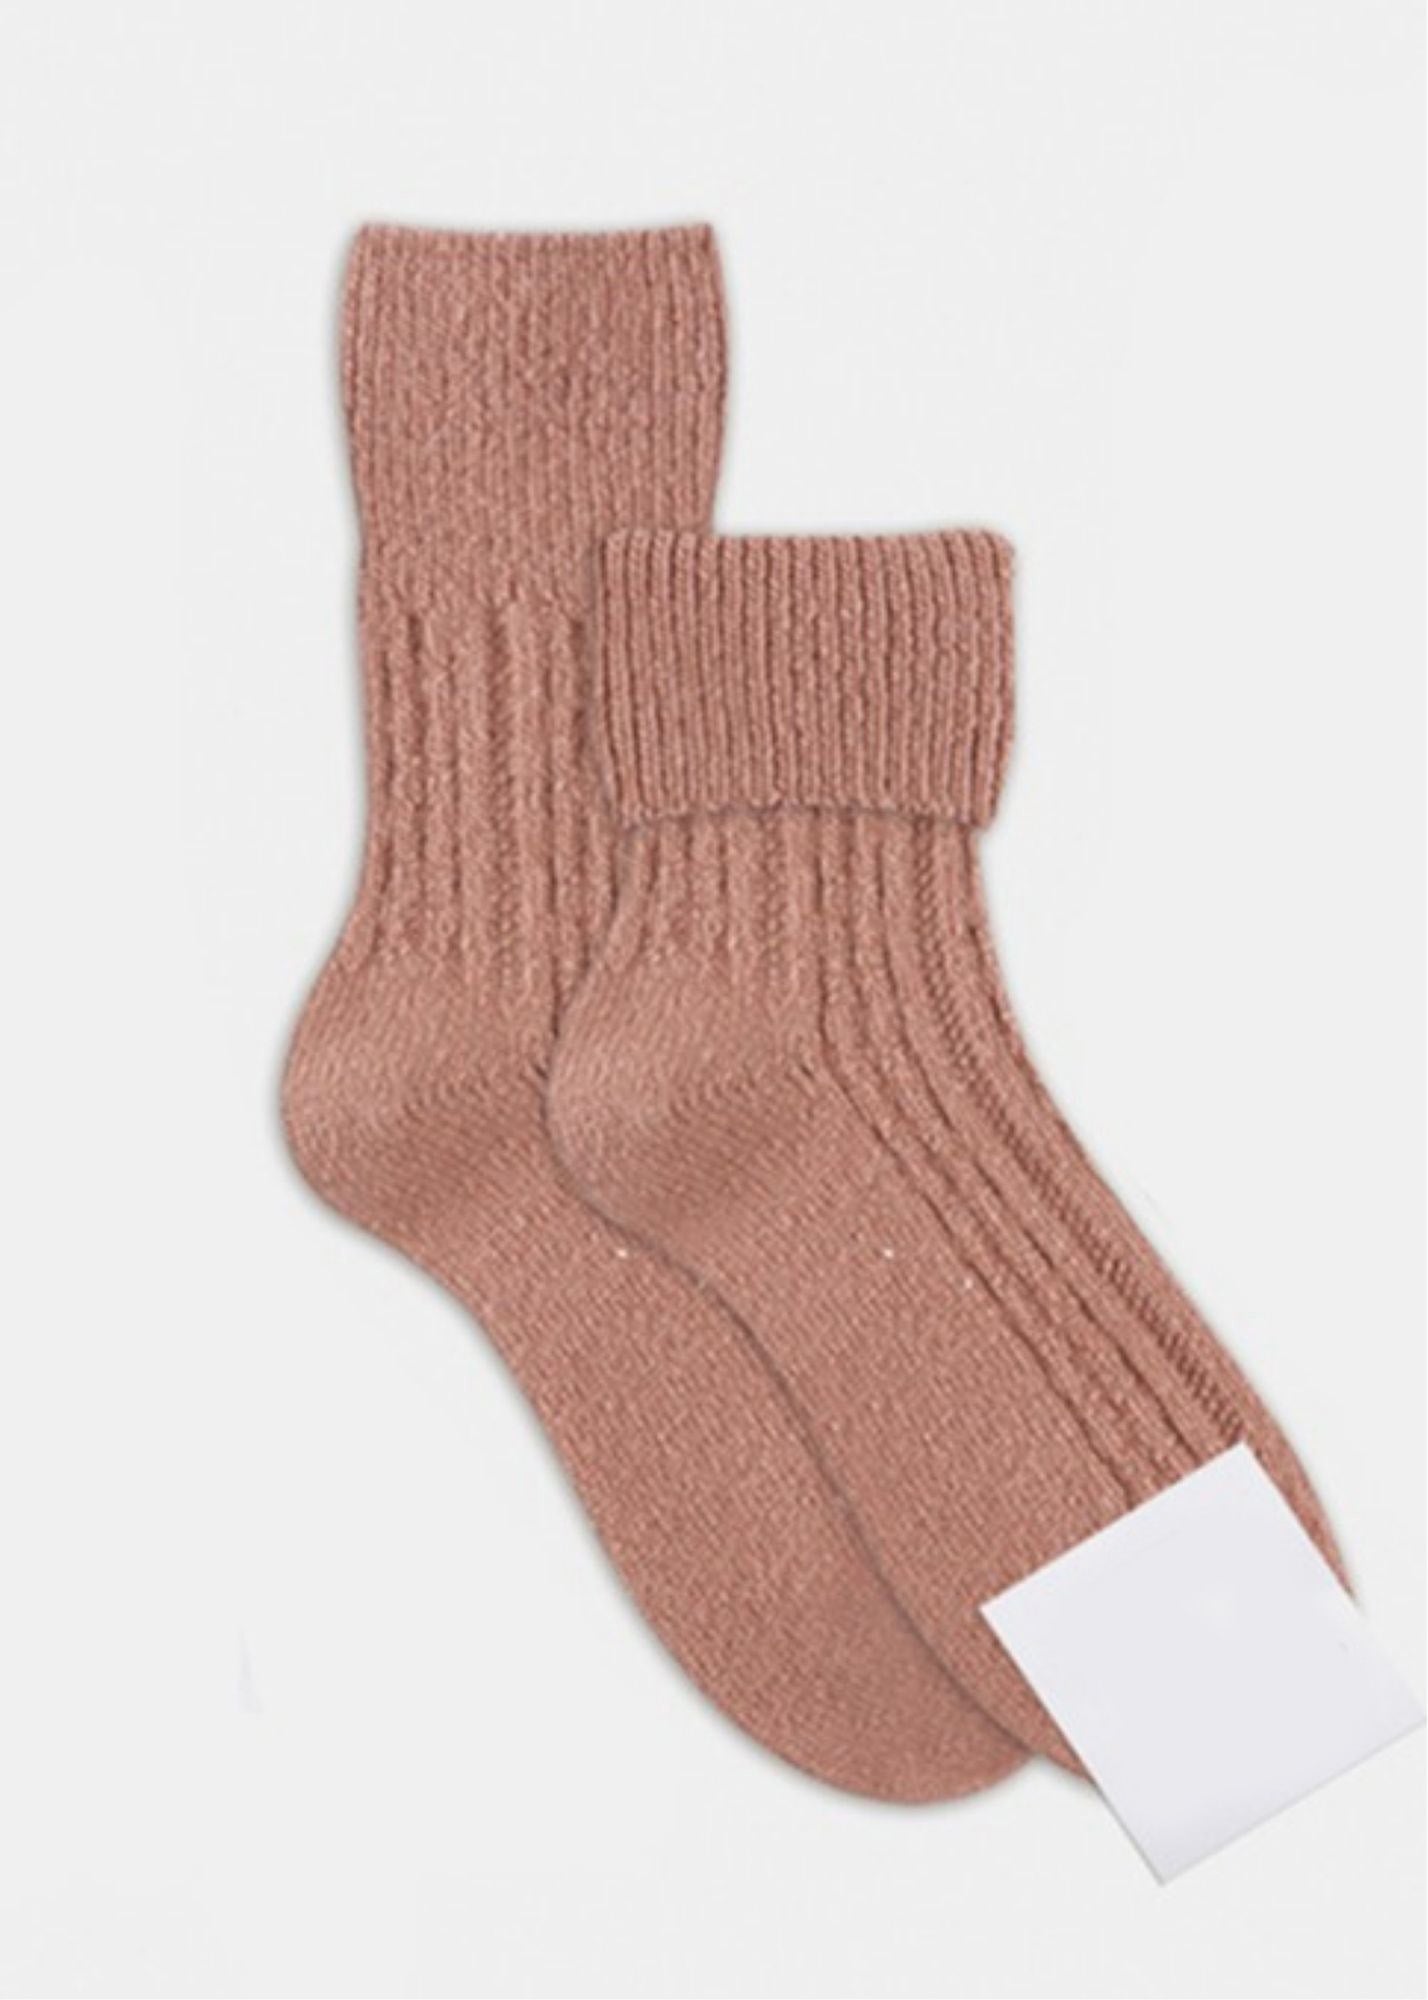 Wool Blend Crew Length Printed Socks Accessories Khaki